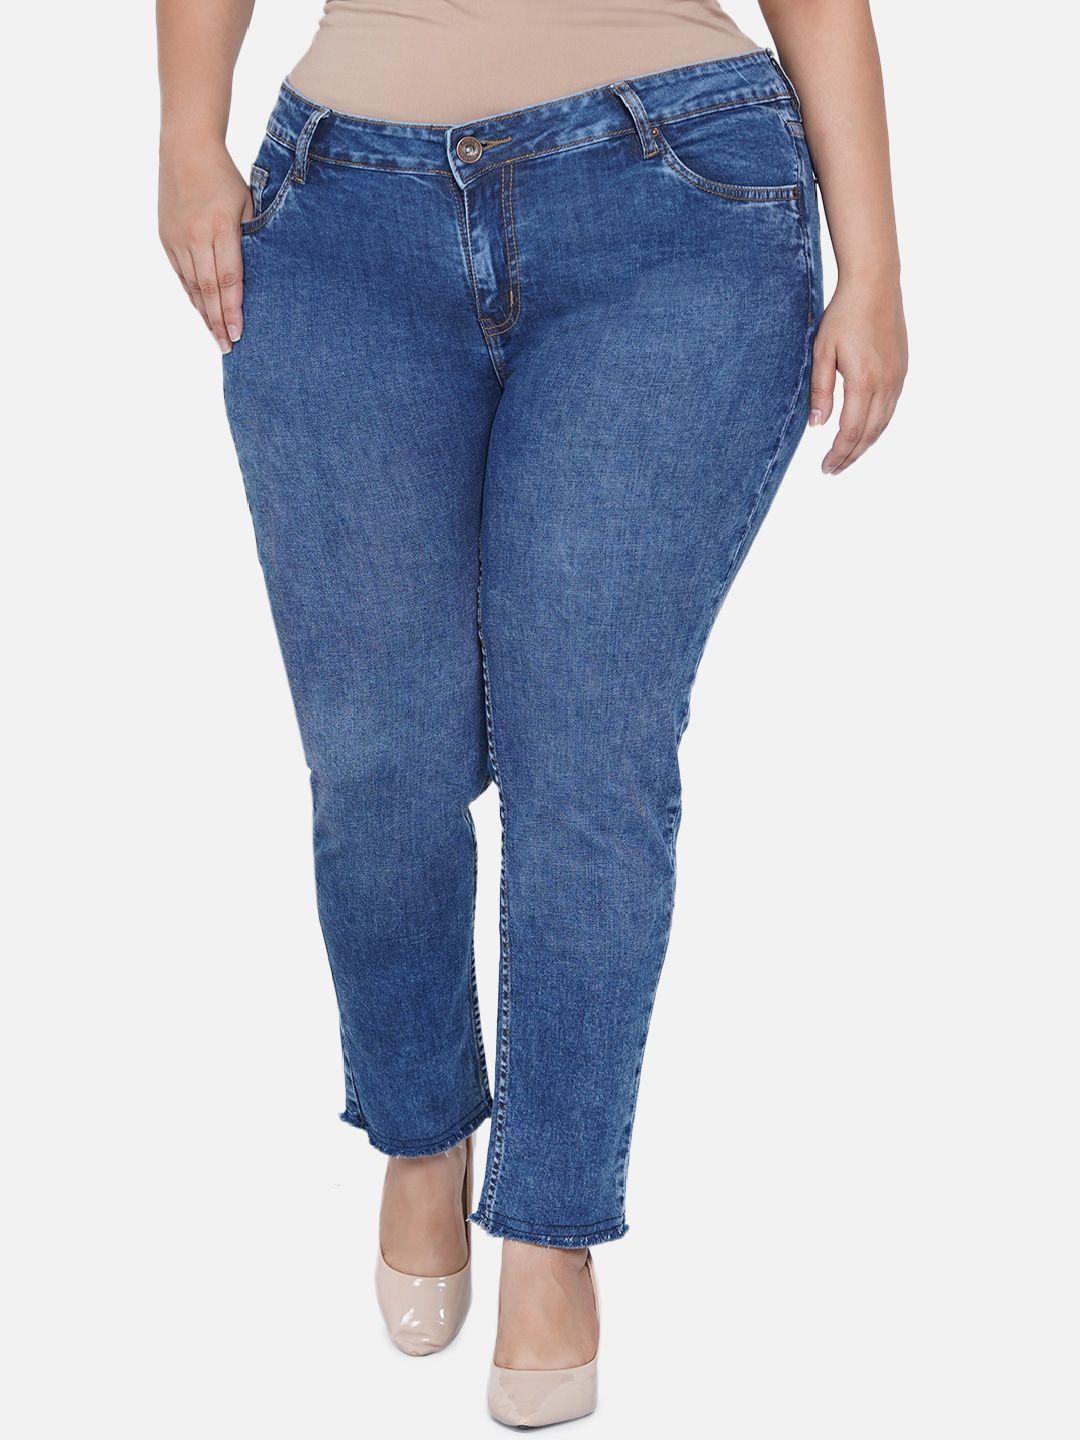 kiaahvi by john pride women skinny fit light fade stretchable jeans